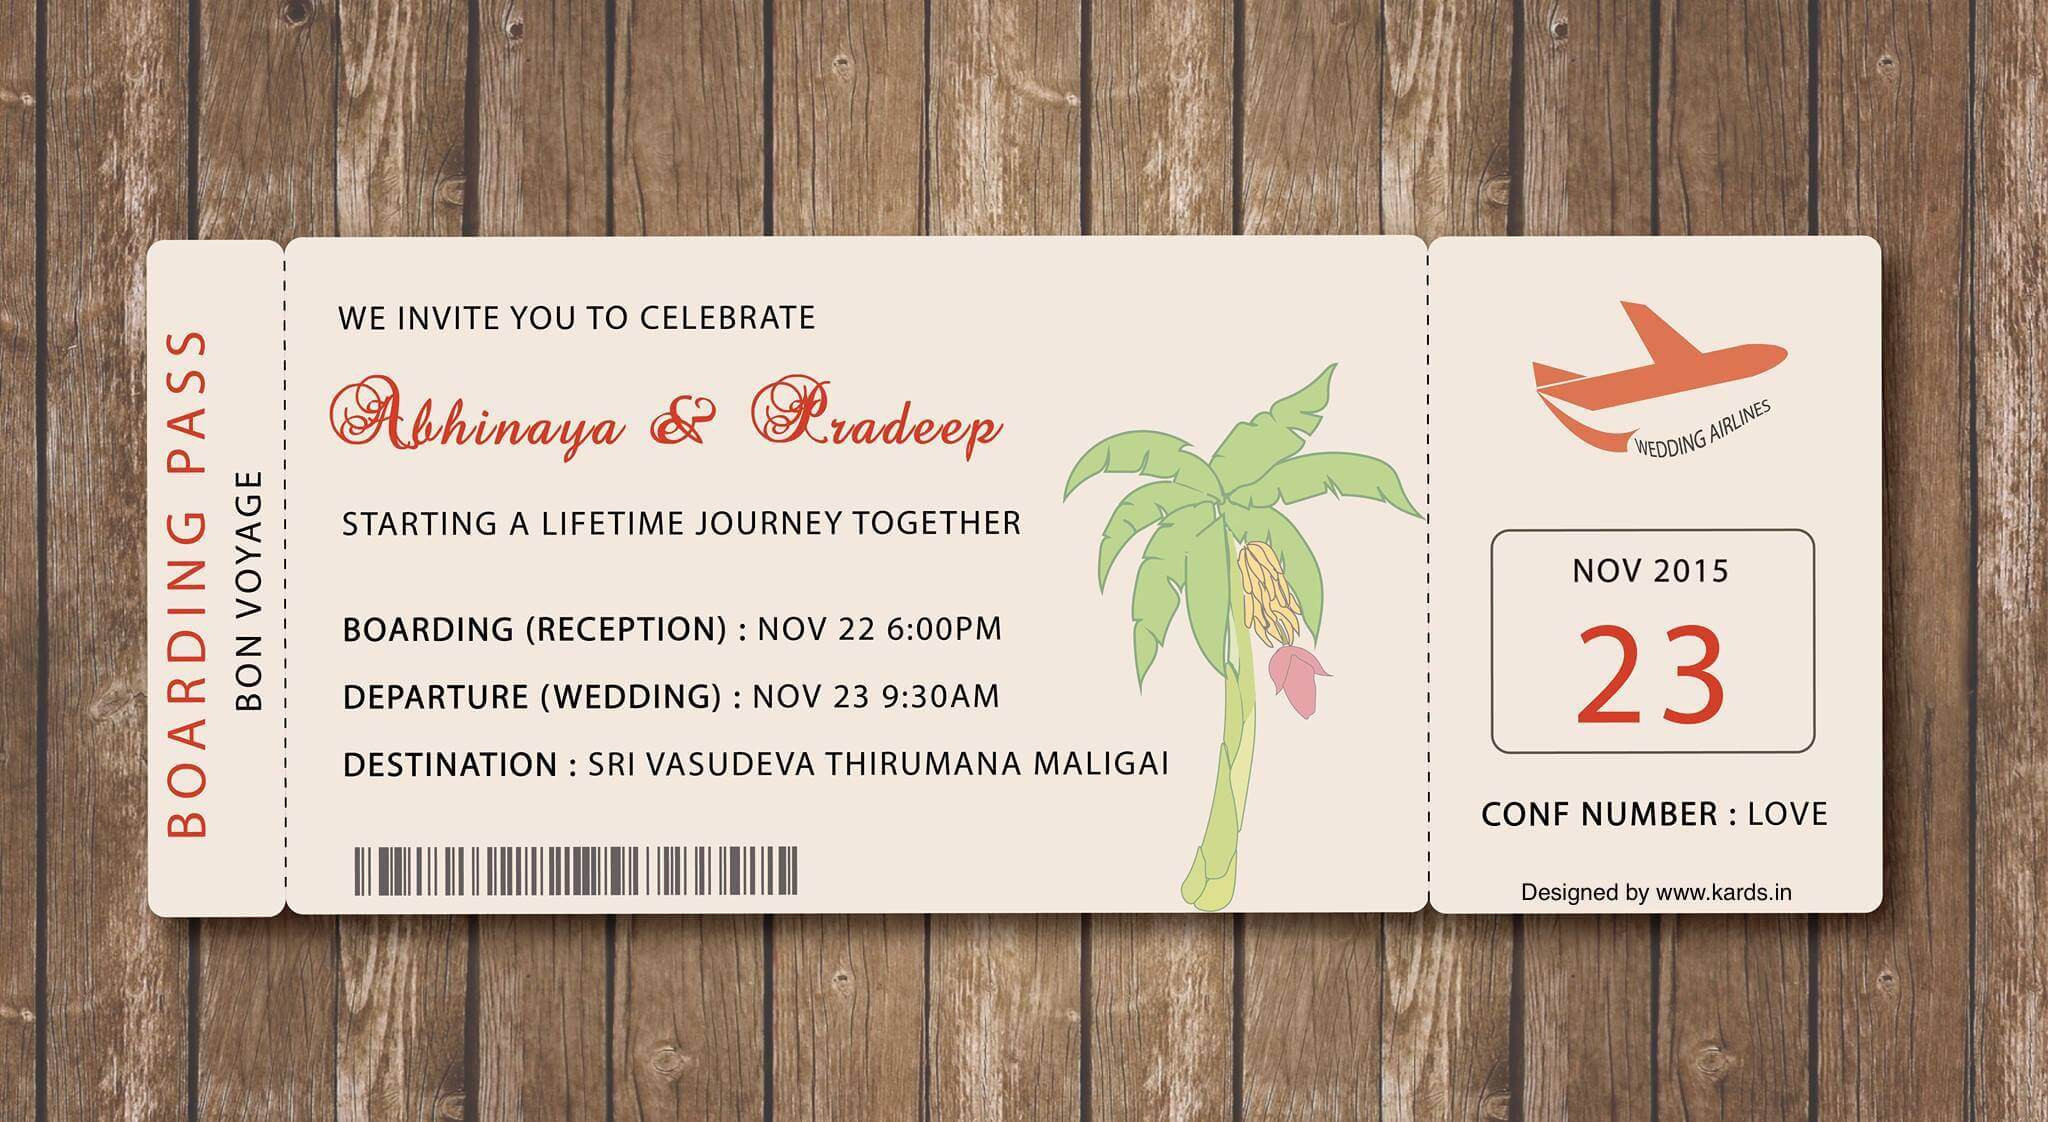 Best Wedding Invitations Online
 The Best 10 Card Websites To Get Your Wedding Invitation